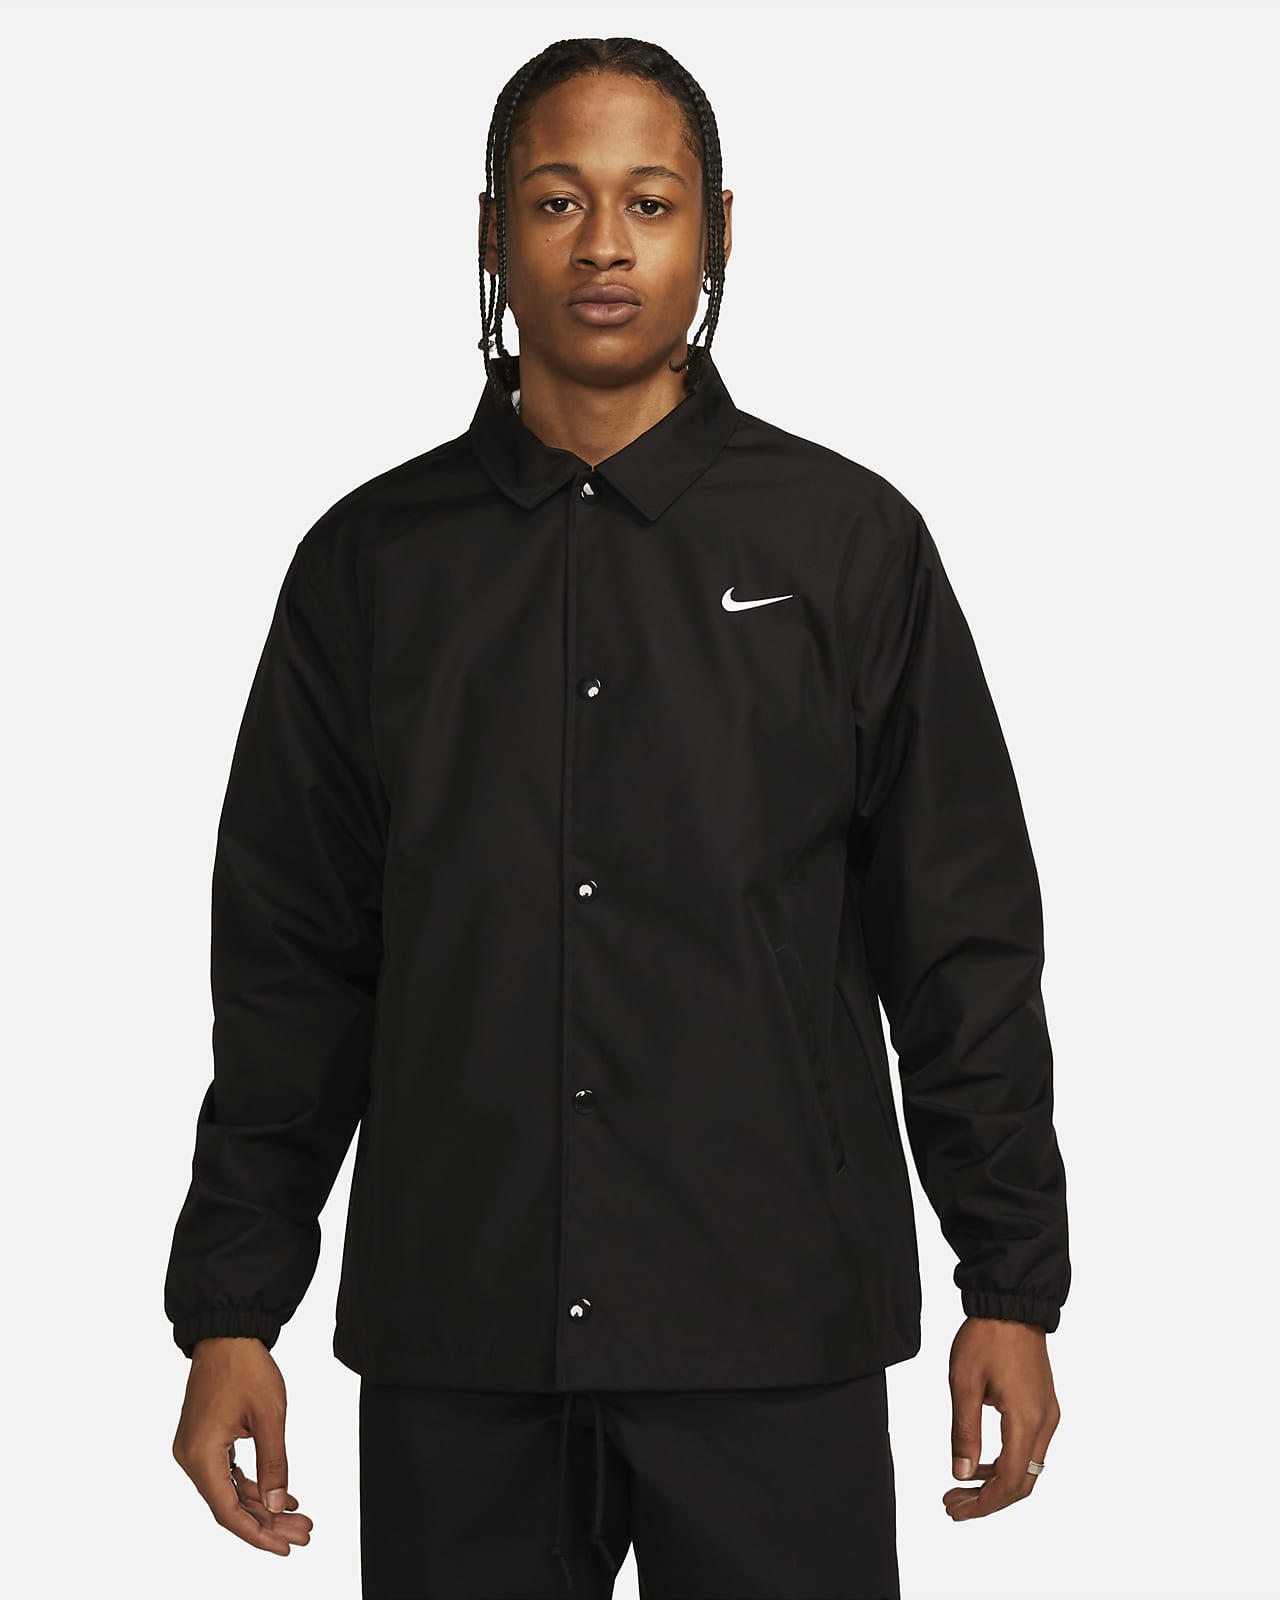 Nike Authentics Men's Lined Coaches Jacket